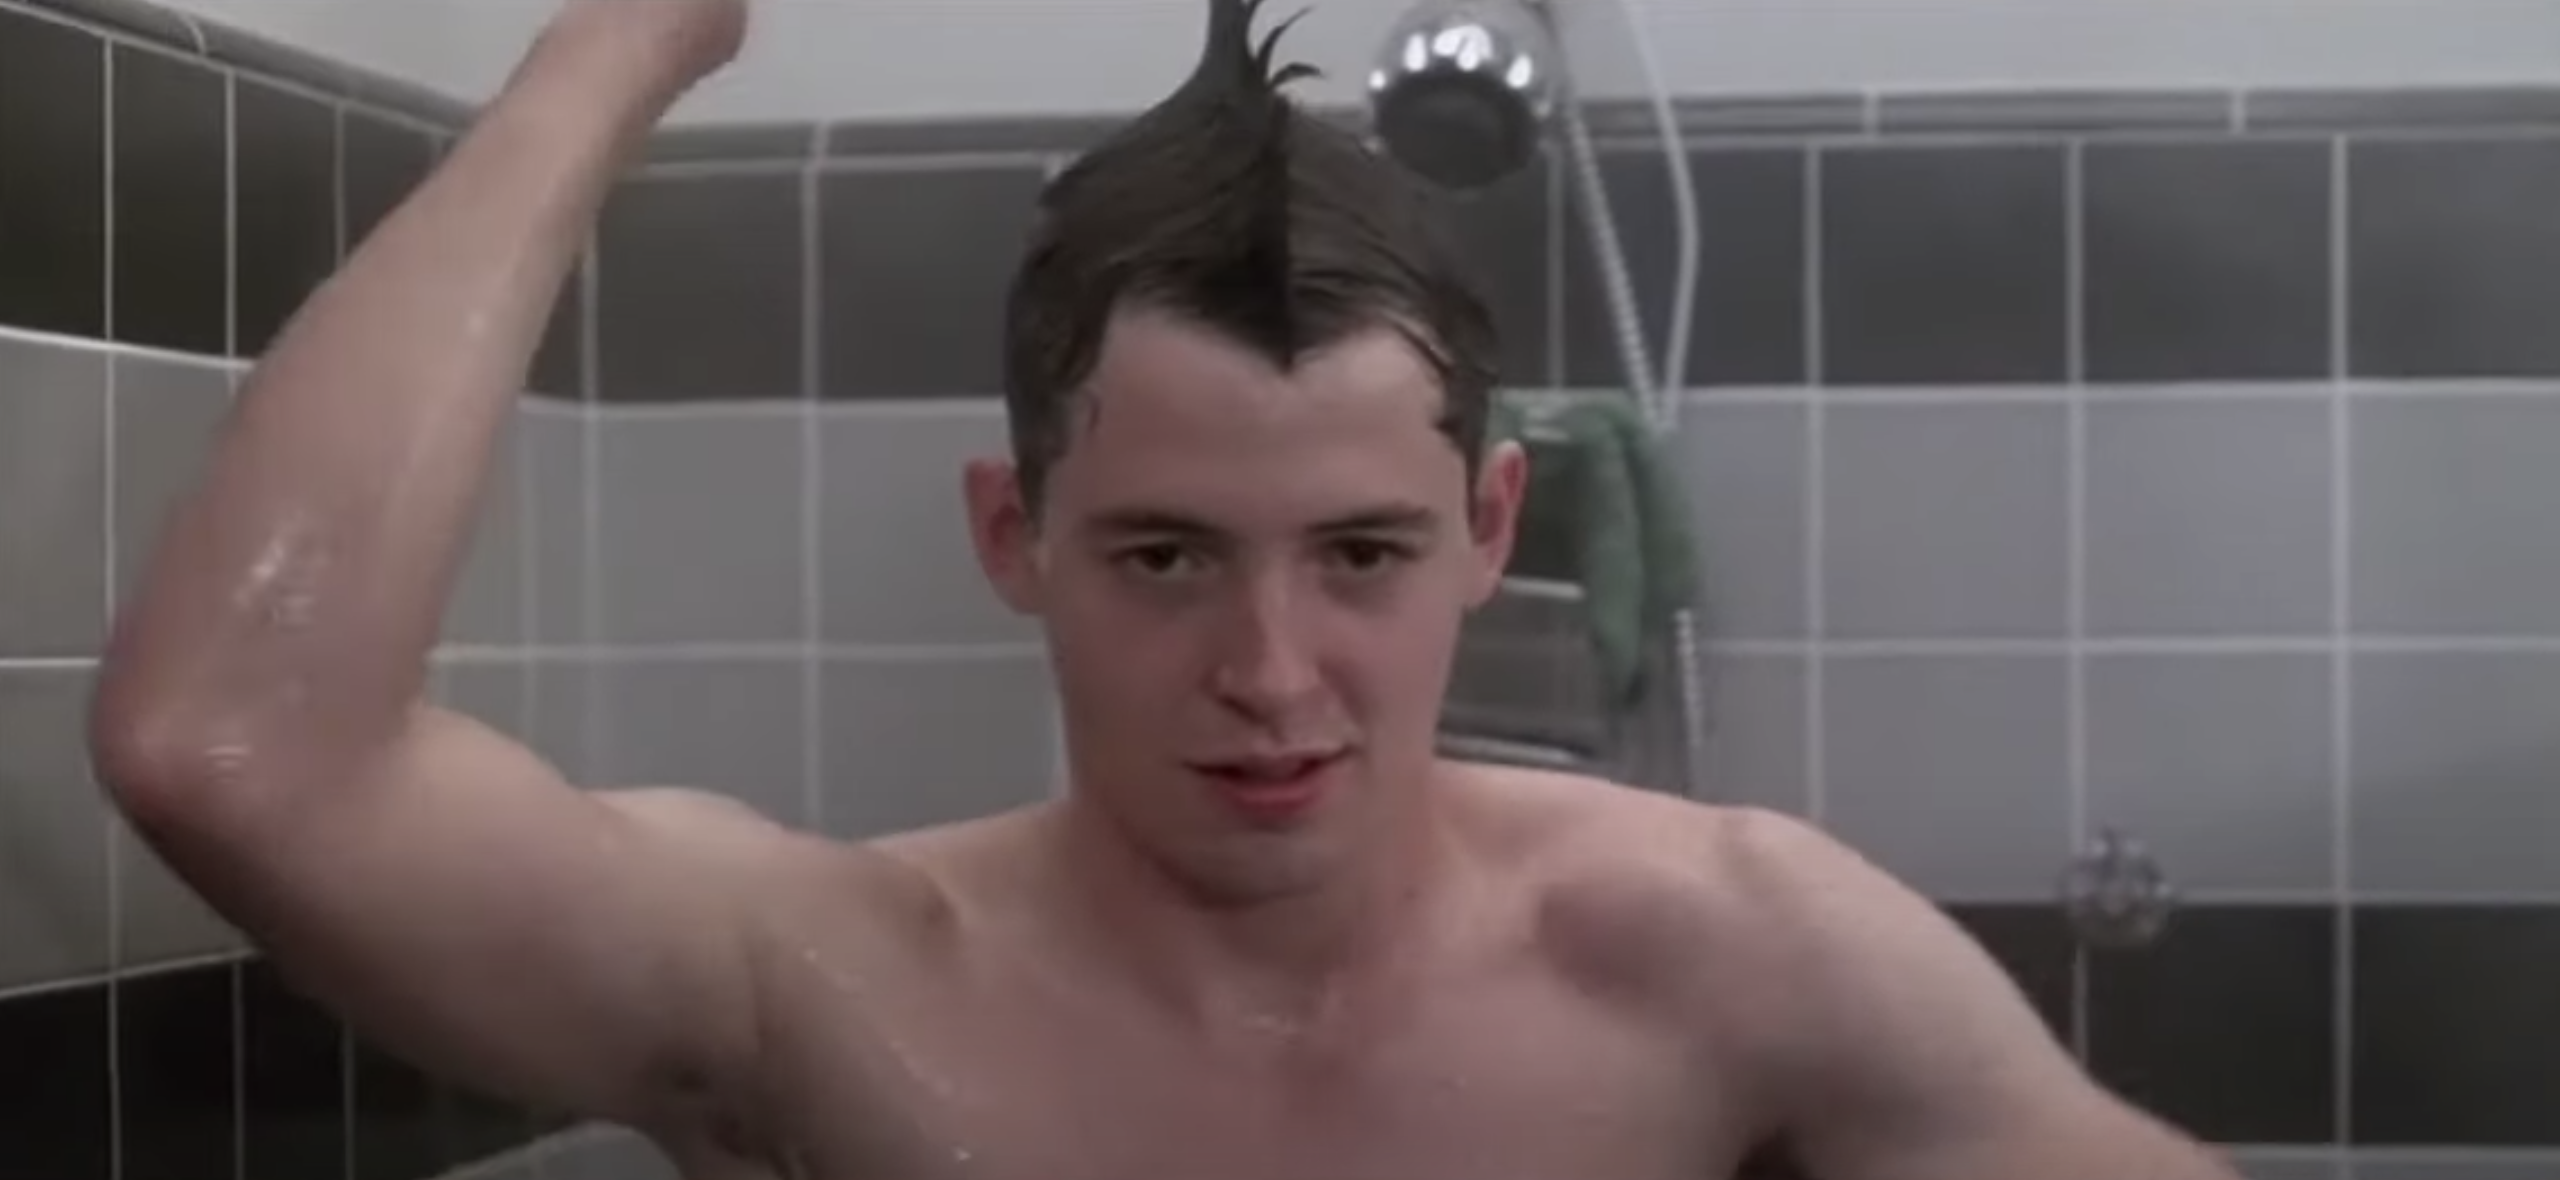 Ferris Bueller taking a shower